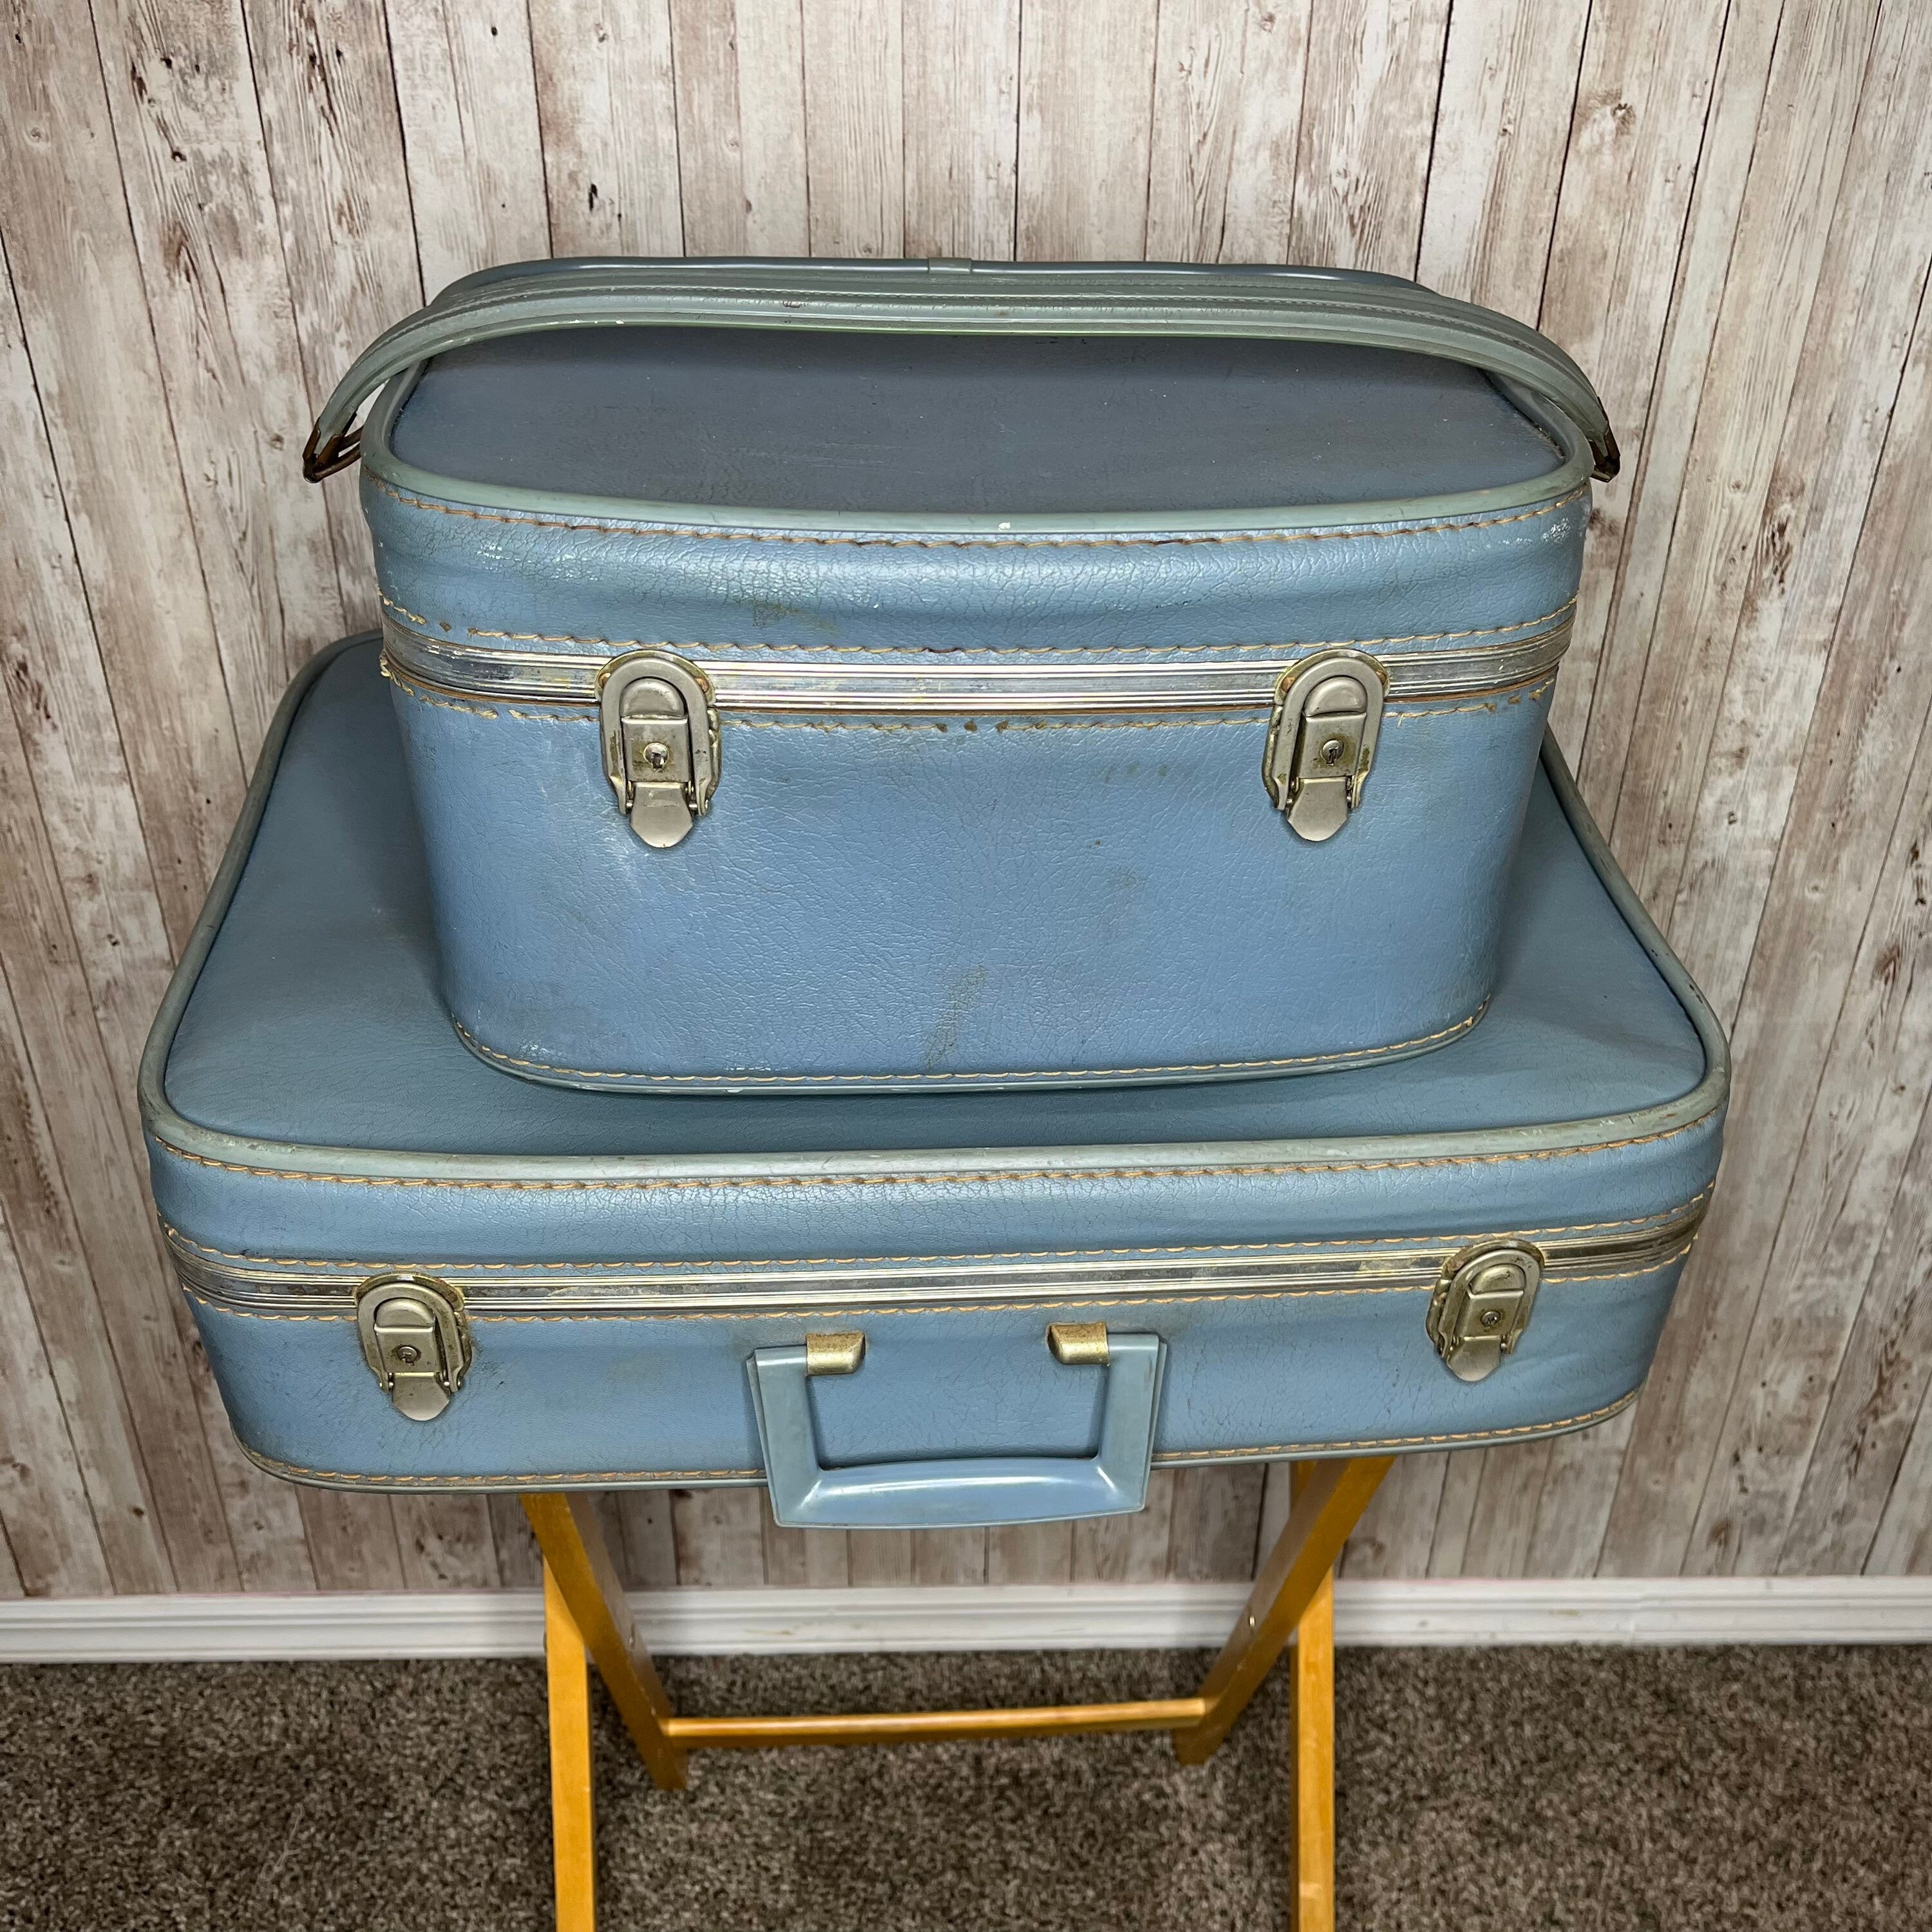 Vintage Trunk Style Travel Luggage Set of 2 